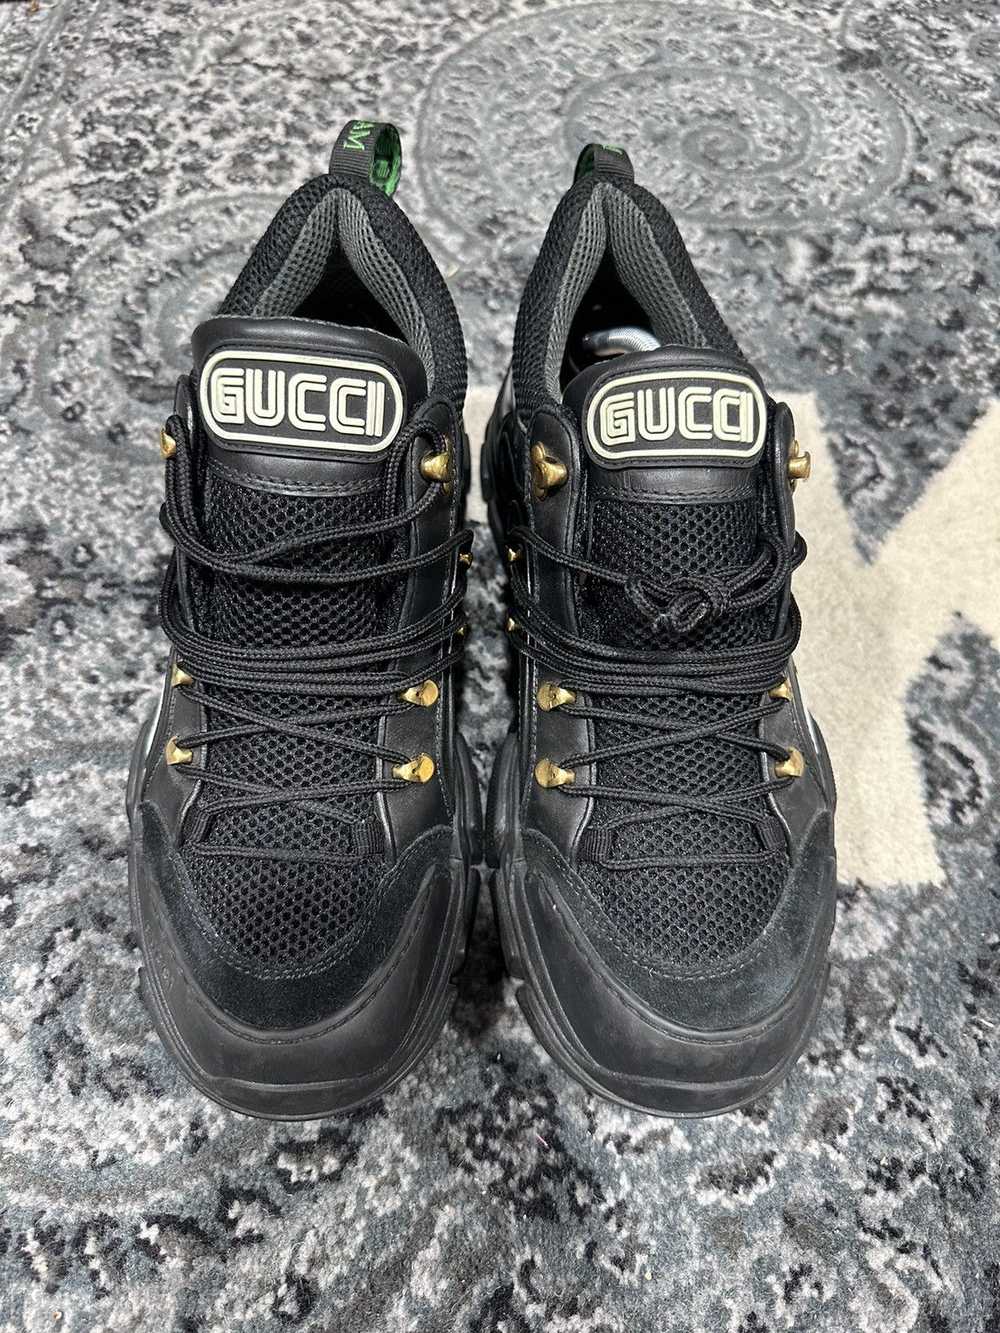 Gucci Gucci Flashtrek Sneakers Size 11G (12US) - image 4